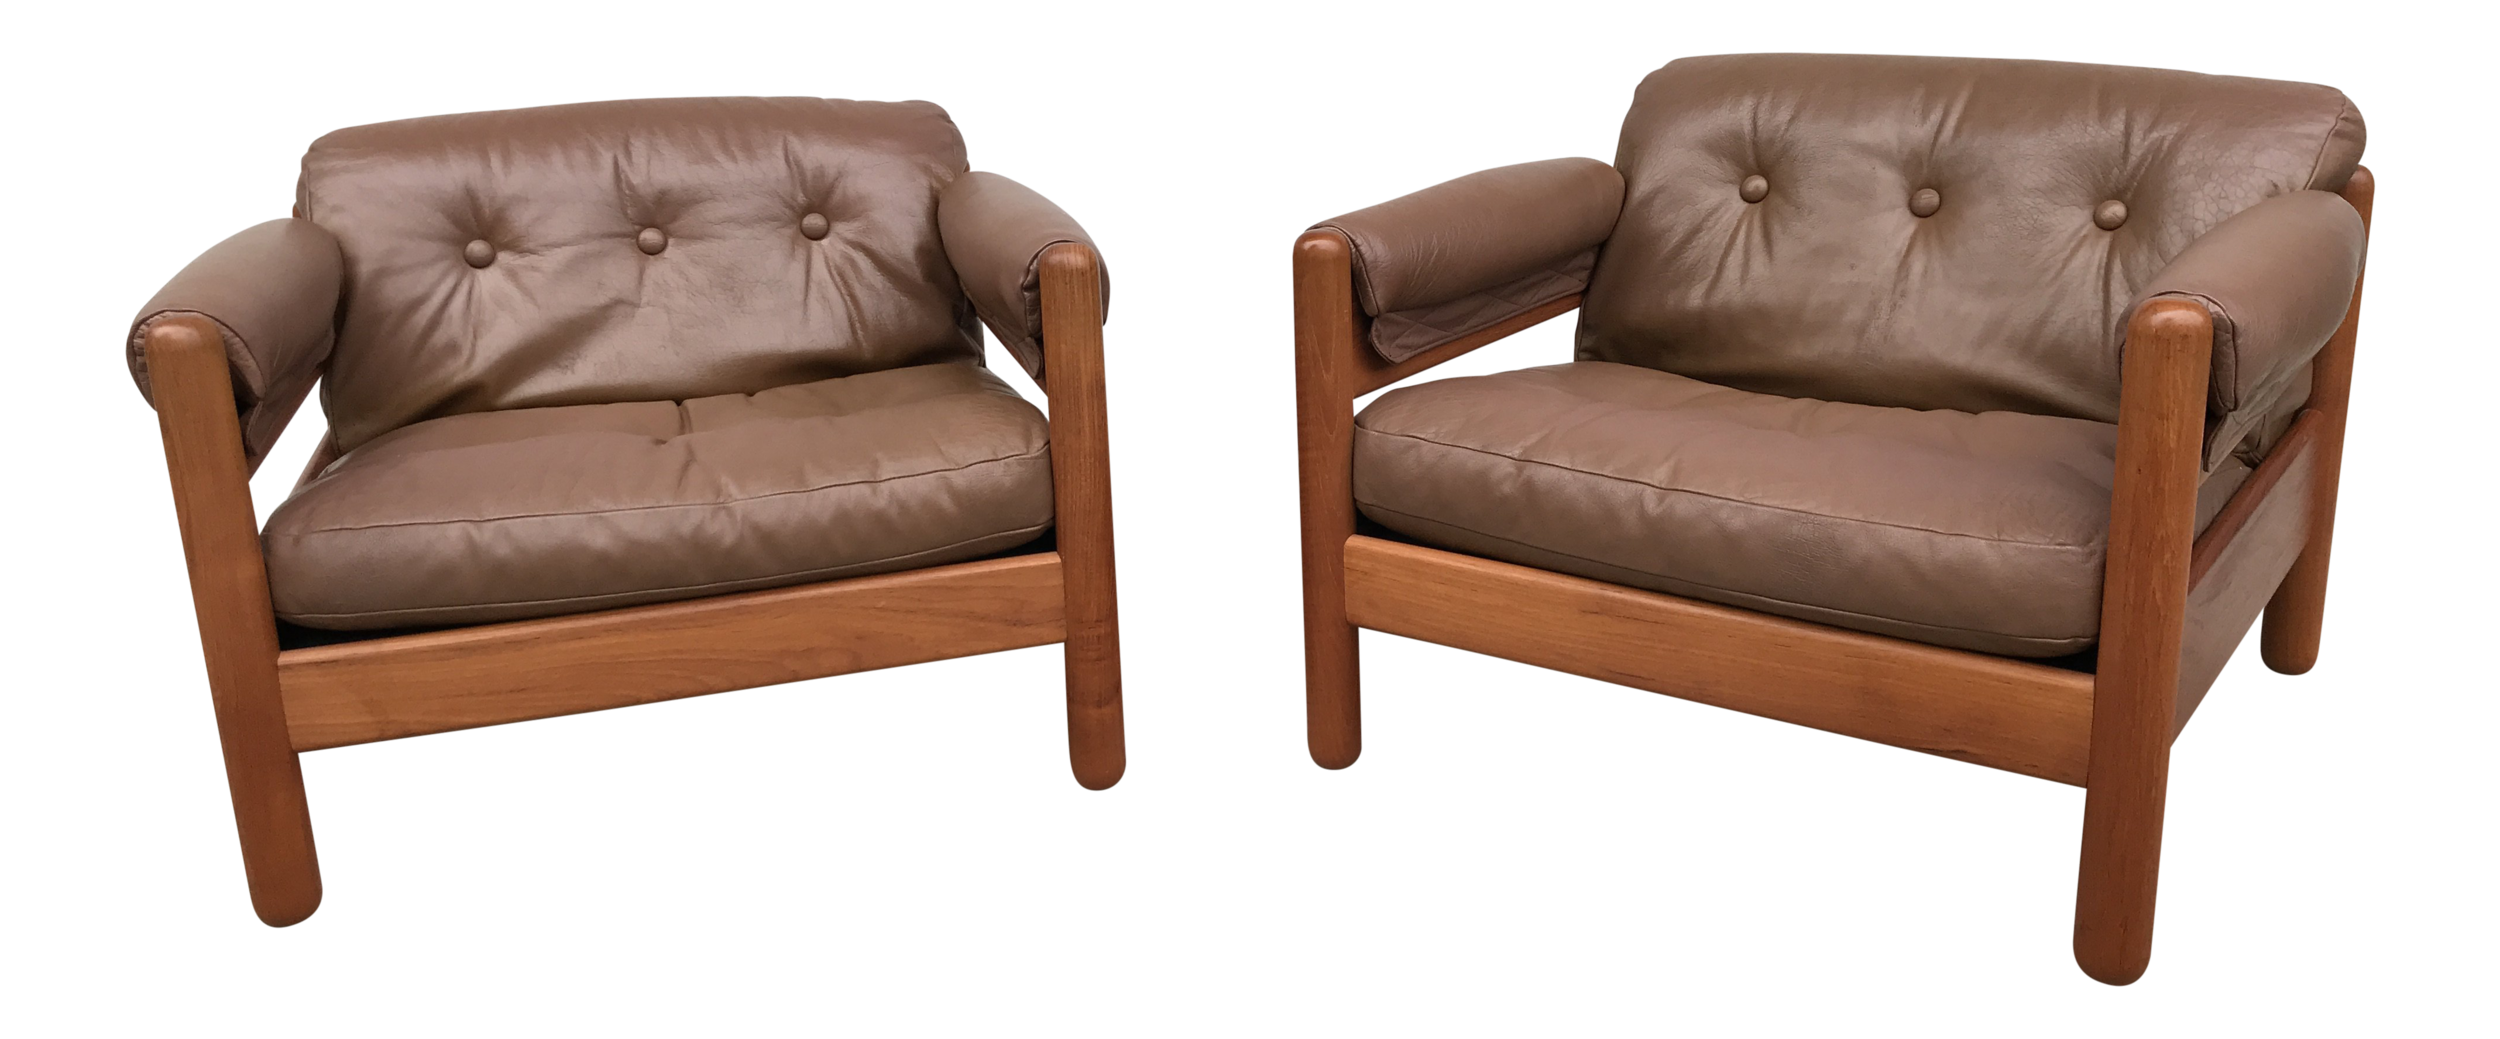 Pair of Makael Laursen Teak & Leather Danish Modern Lounge Chairs